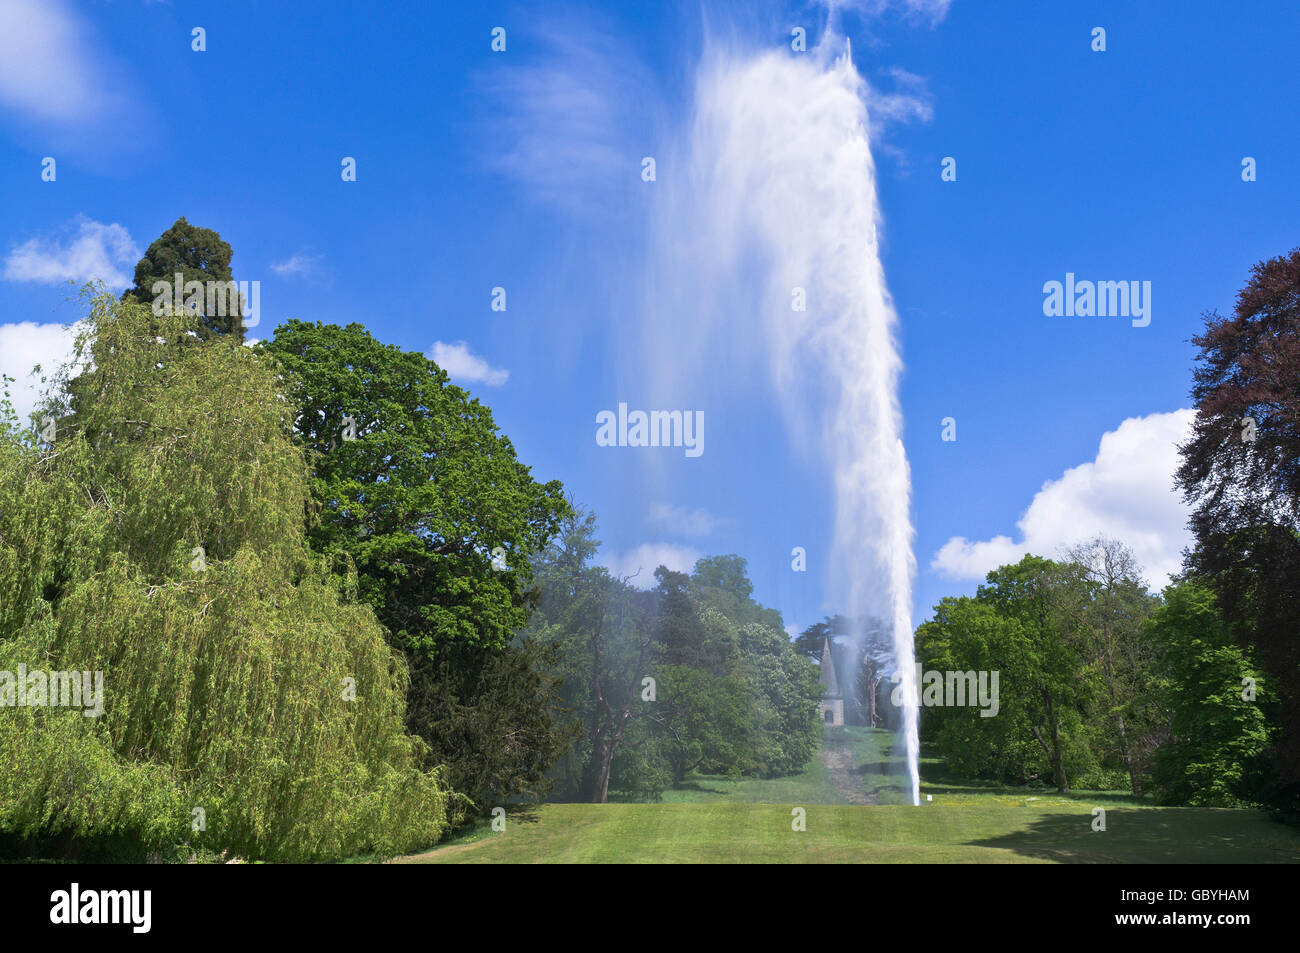 Dh Stanway House COTSWOLDS GLOUCESTERSHIRE piu' alta fontana di UK 300 piedi alto singolo getto fontana in motivi Foto Stock